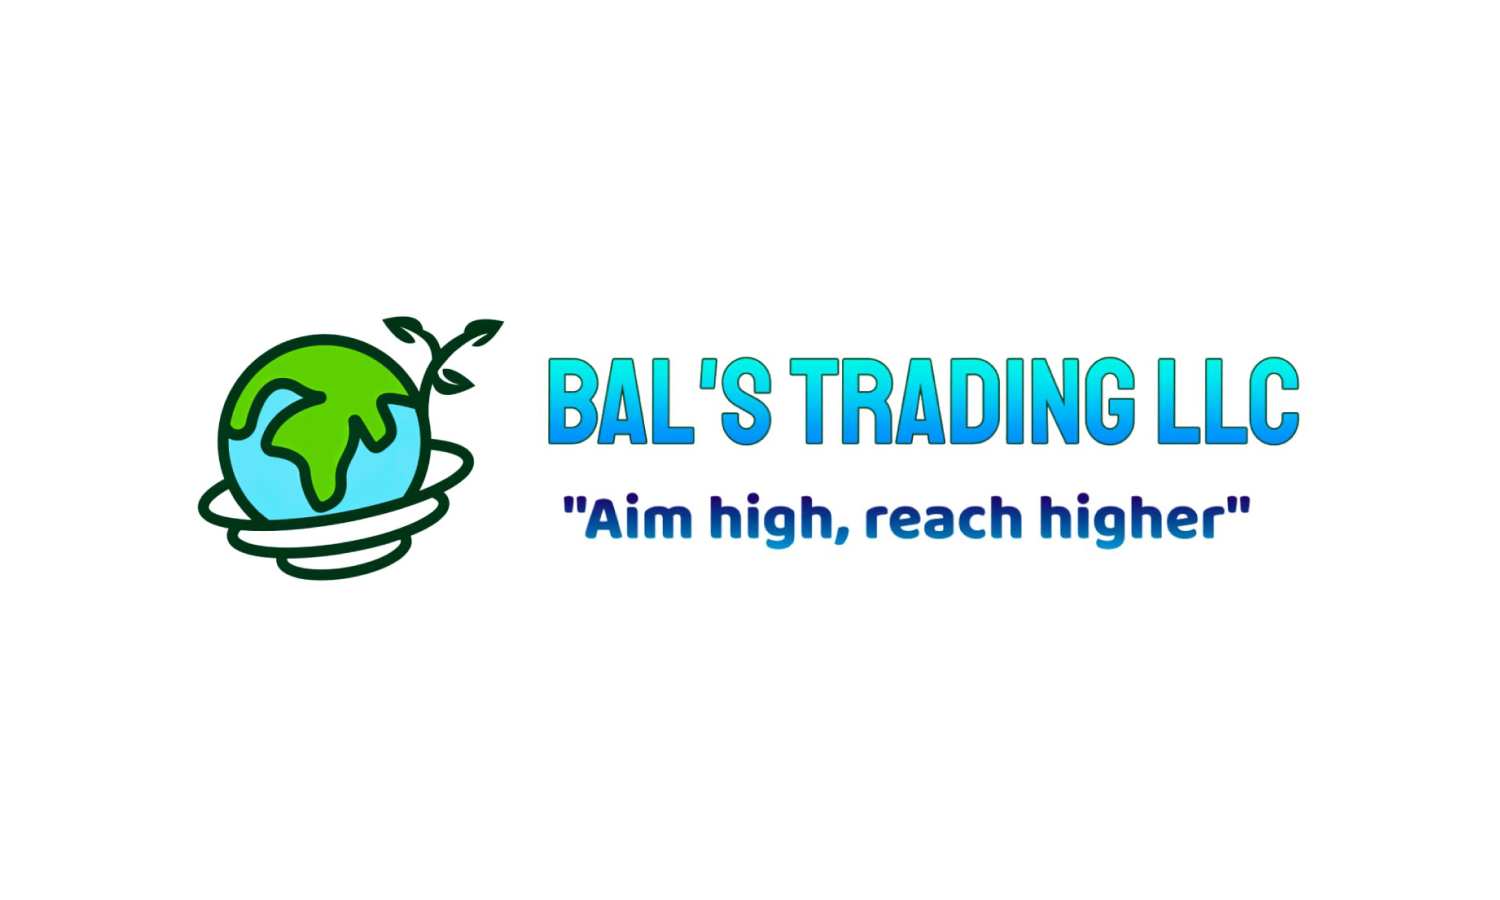 bals trading llc